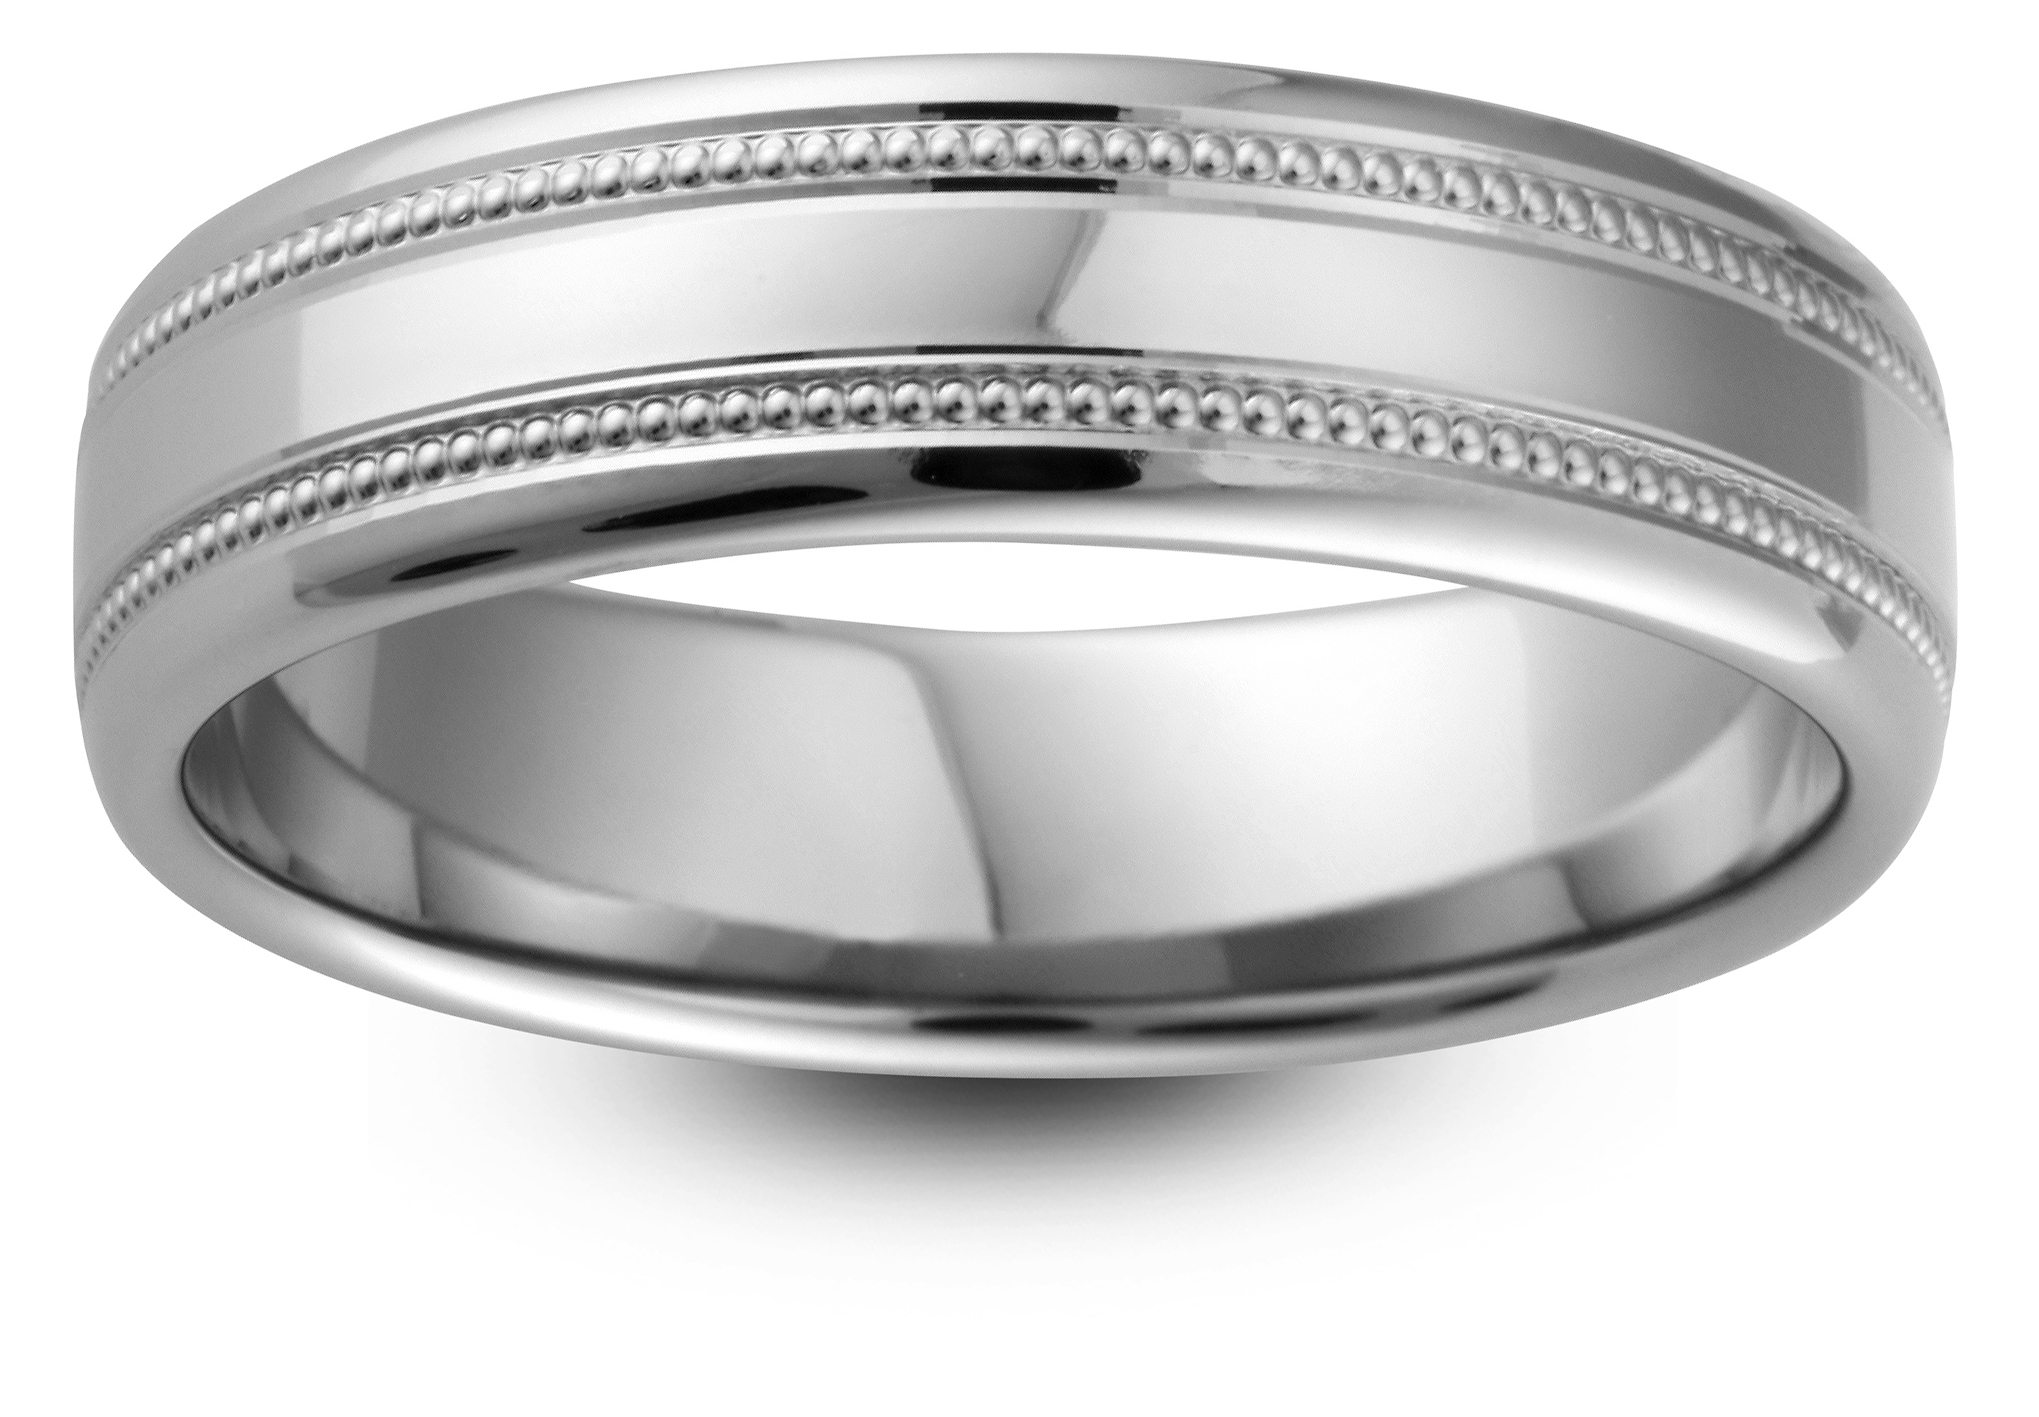 Men’s Patterned Wedding Ring